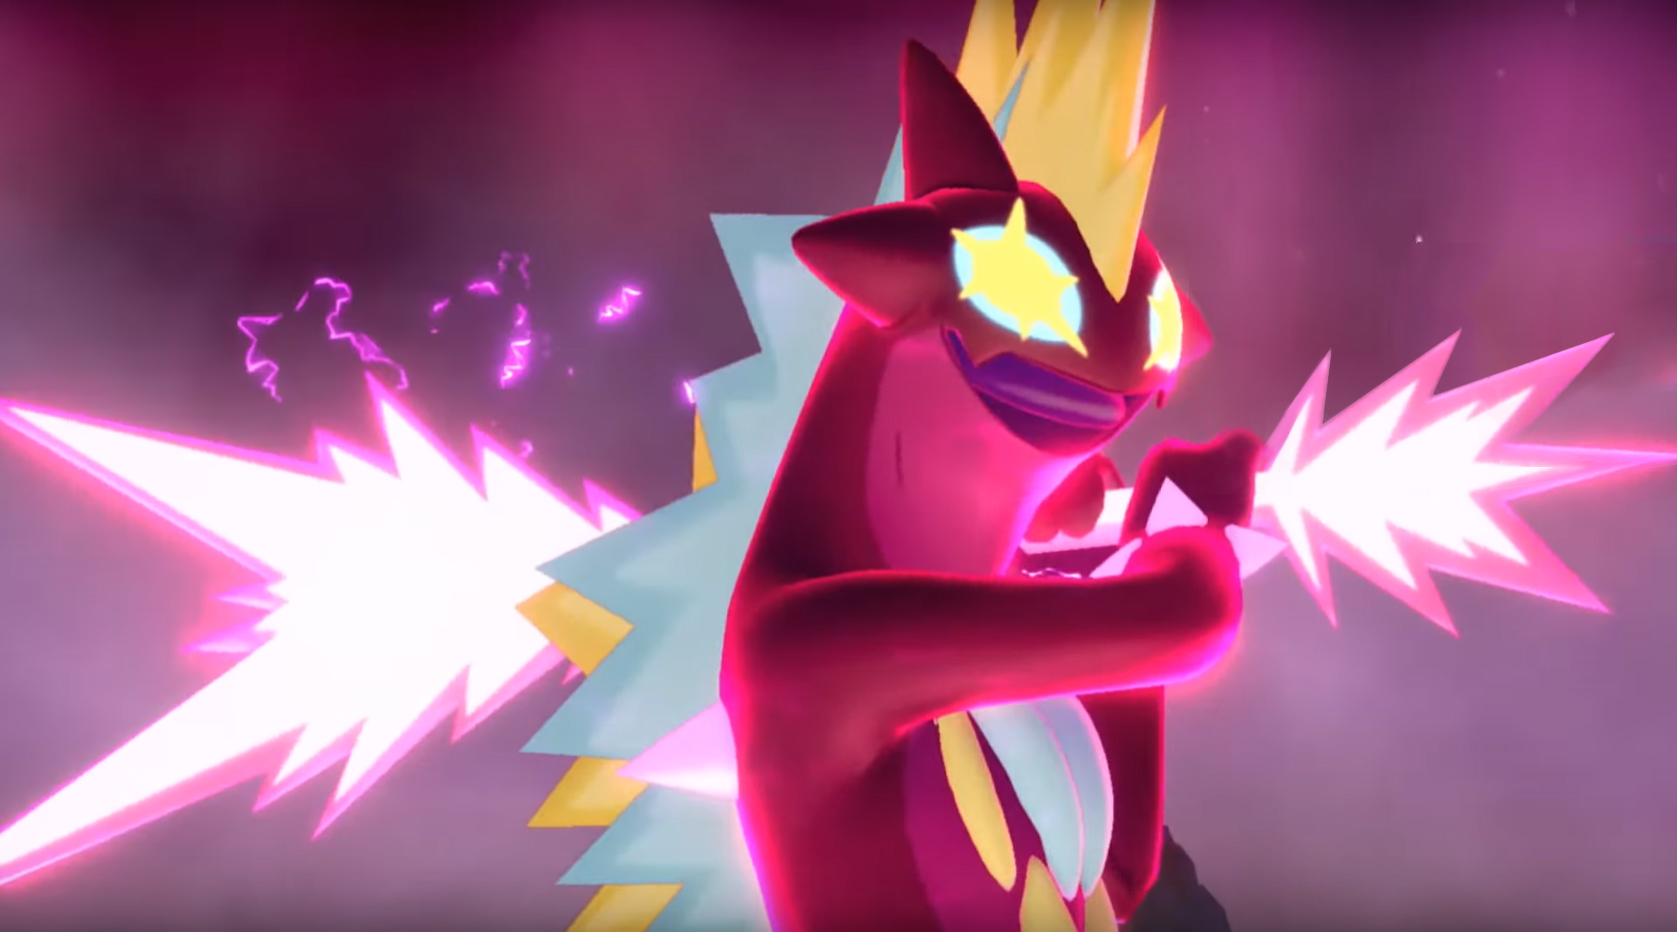 Pokémon Sword & Shield - All Exclusive Gigantamax Raid Battles 